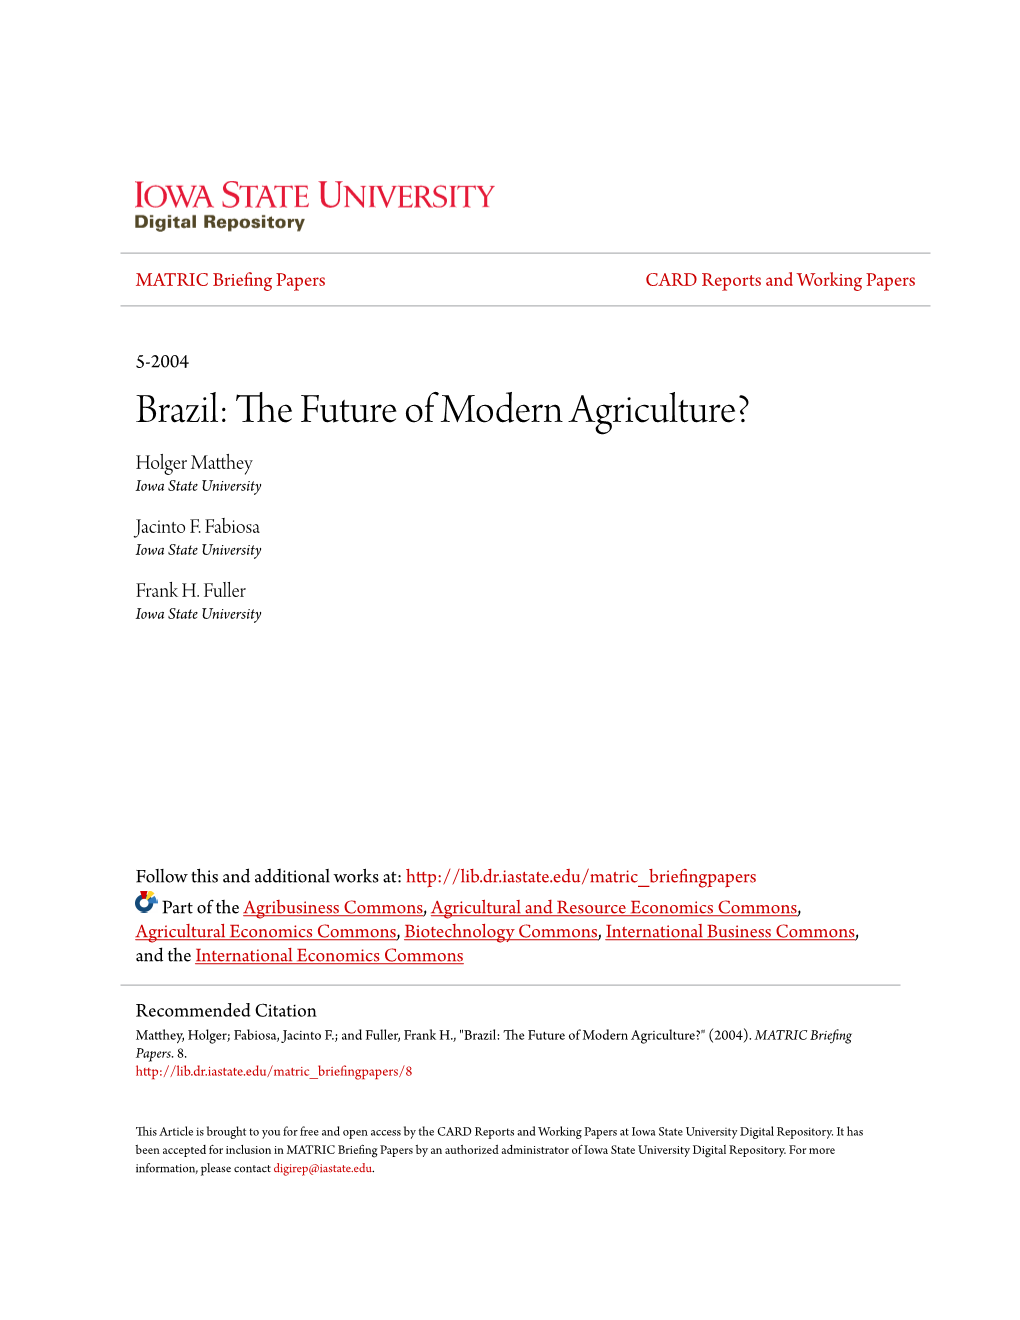 Brazil: the Uturf E of Modern Agriculture? Holger Matthey Iowa State University